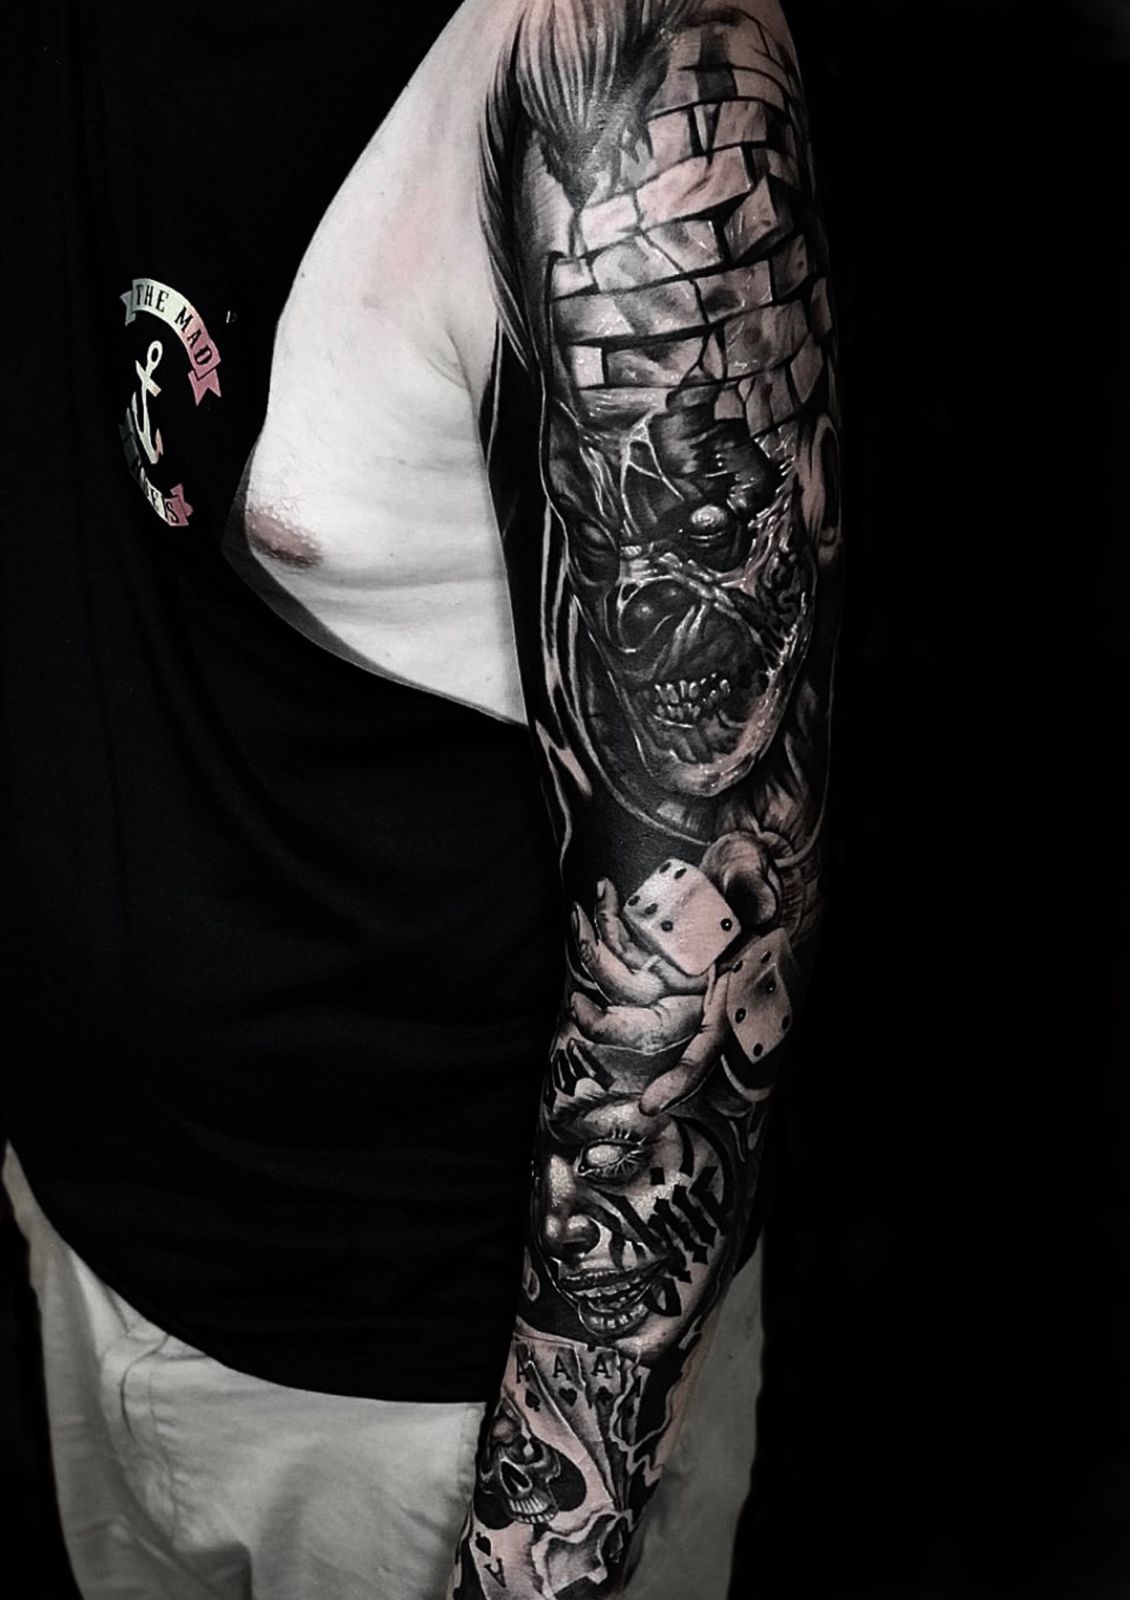 Anahata Ink Tattoo Kuta Bali - Full Sleeve Nacro Style Black Tattoo Project